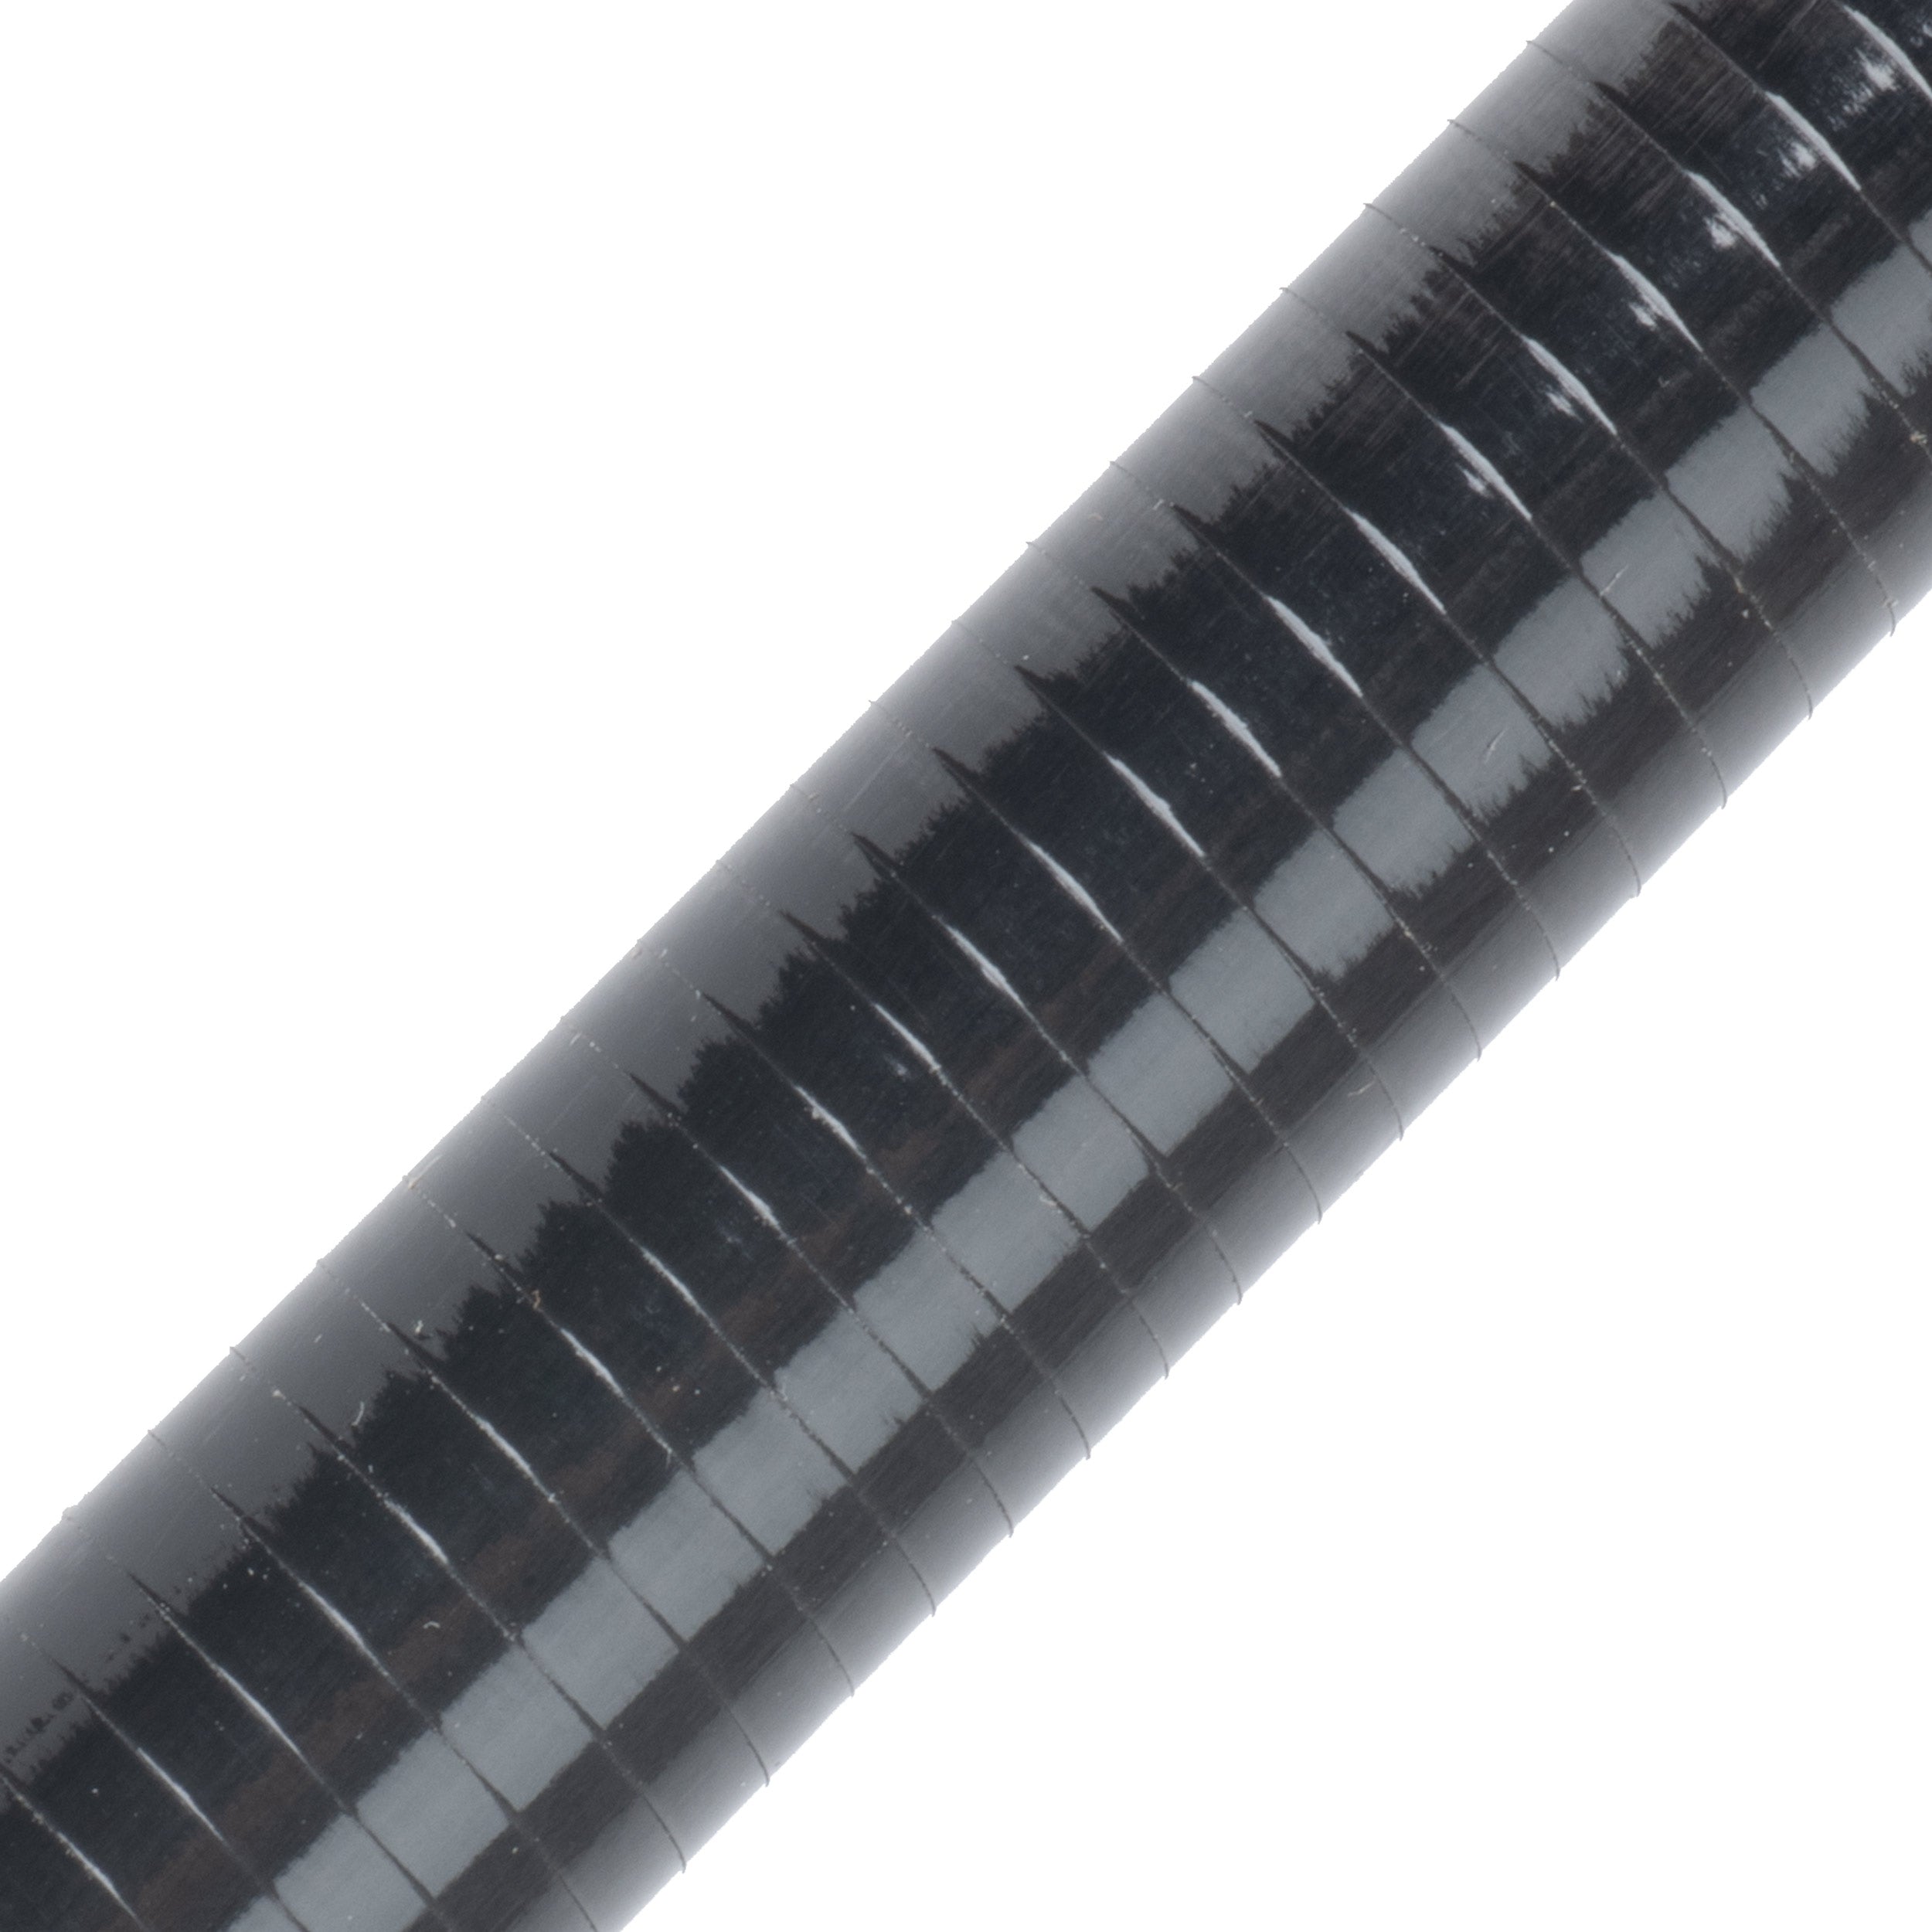 Cashion CR6r Carbon Fiber Popping Rod Blank - CR6r-iP904